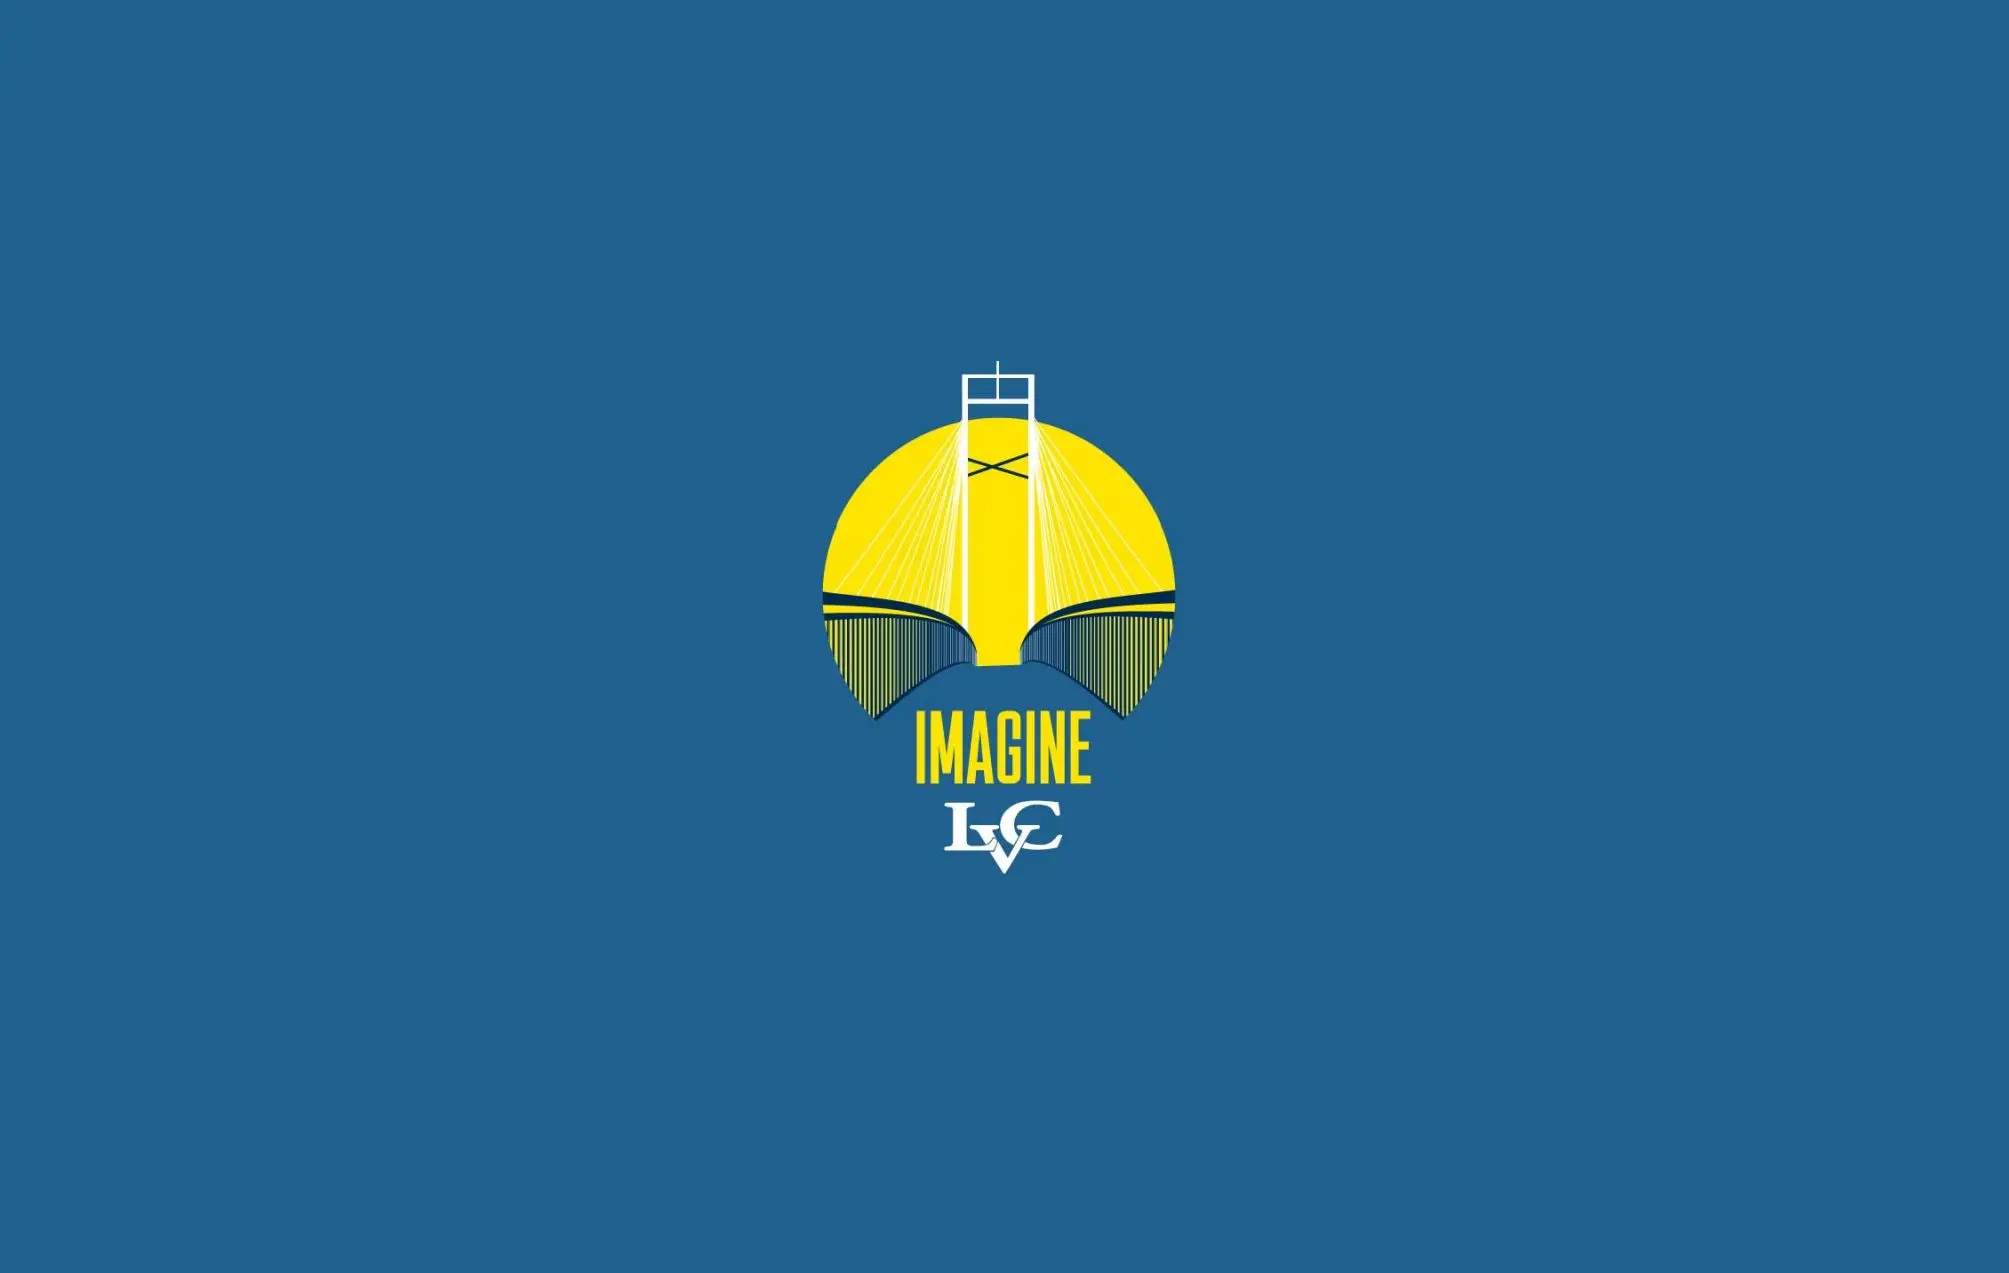 Imagine LVC logo with bridge